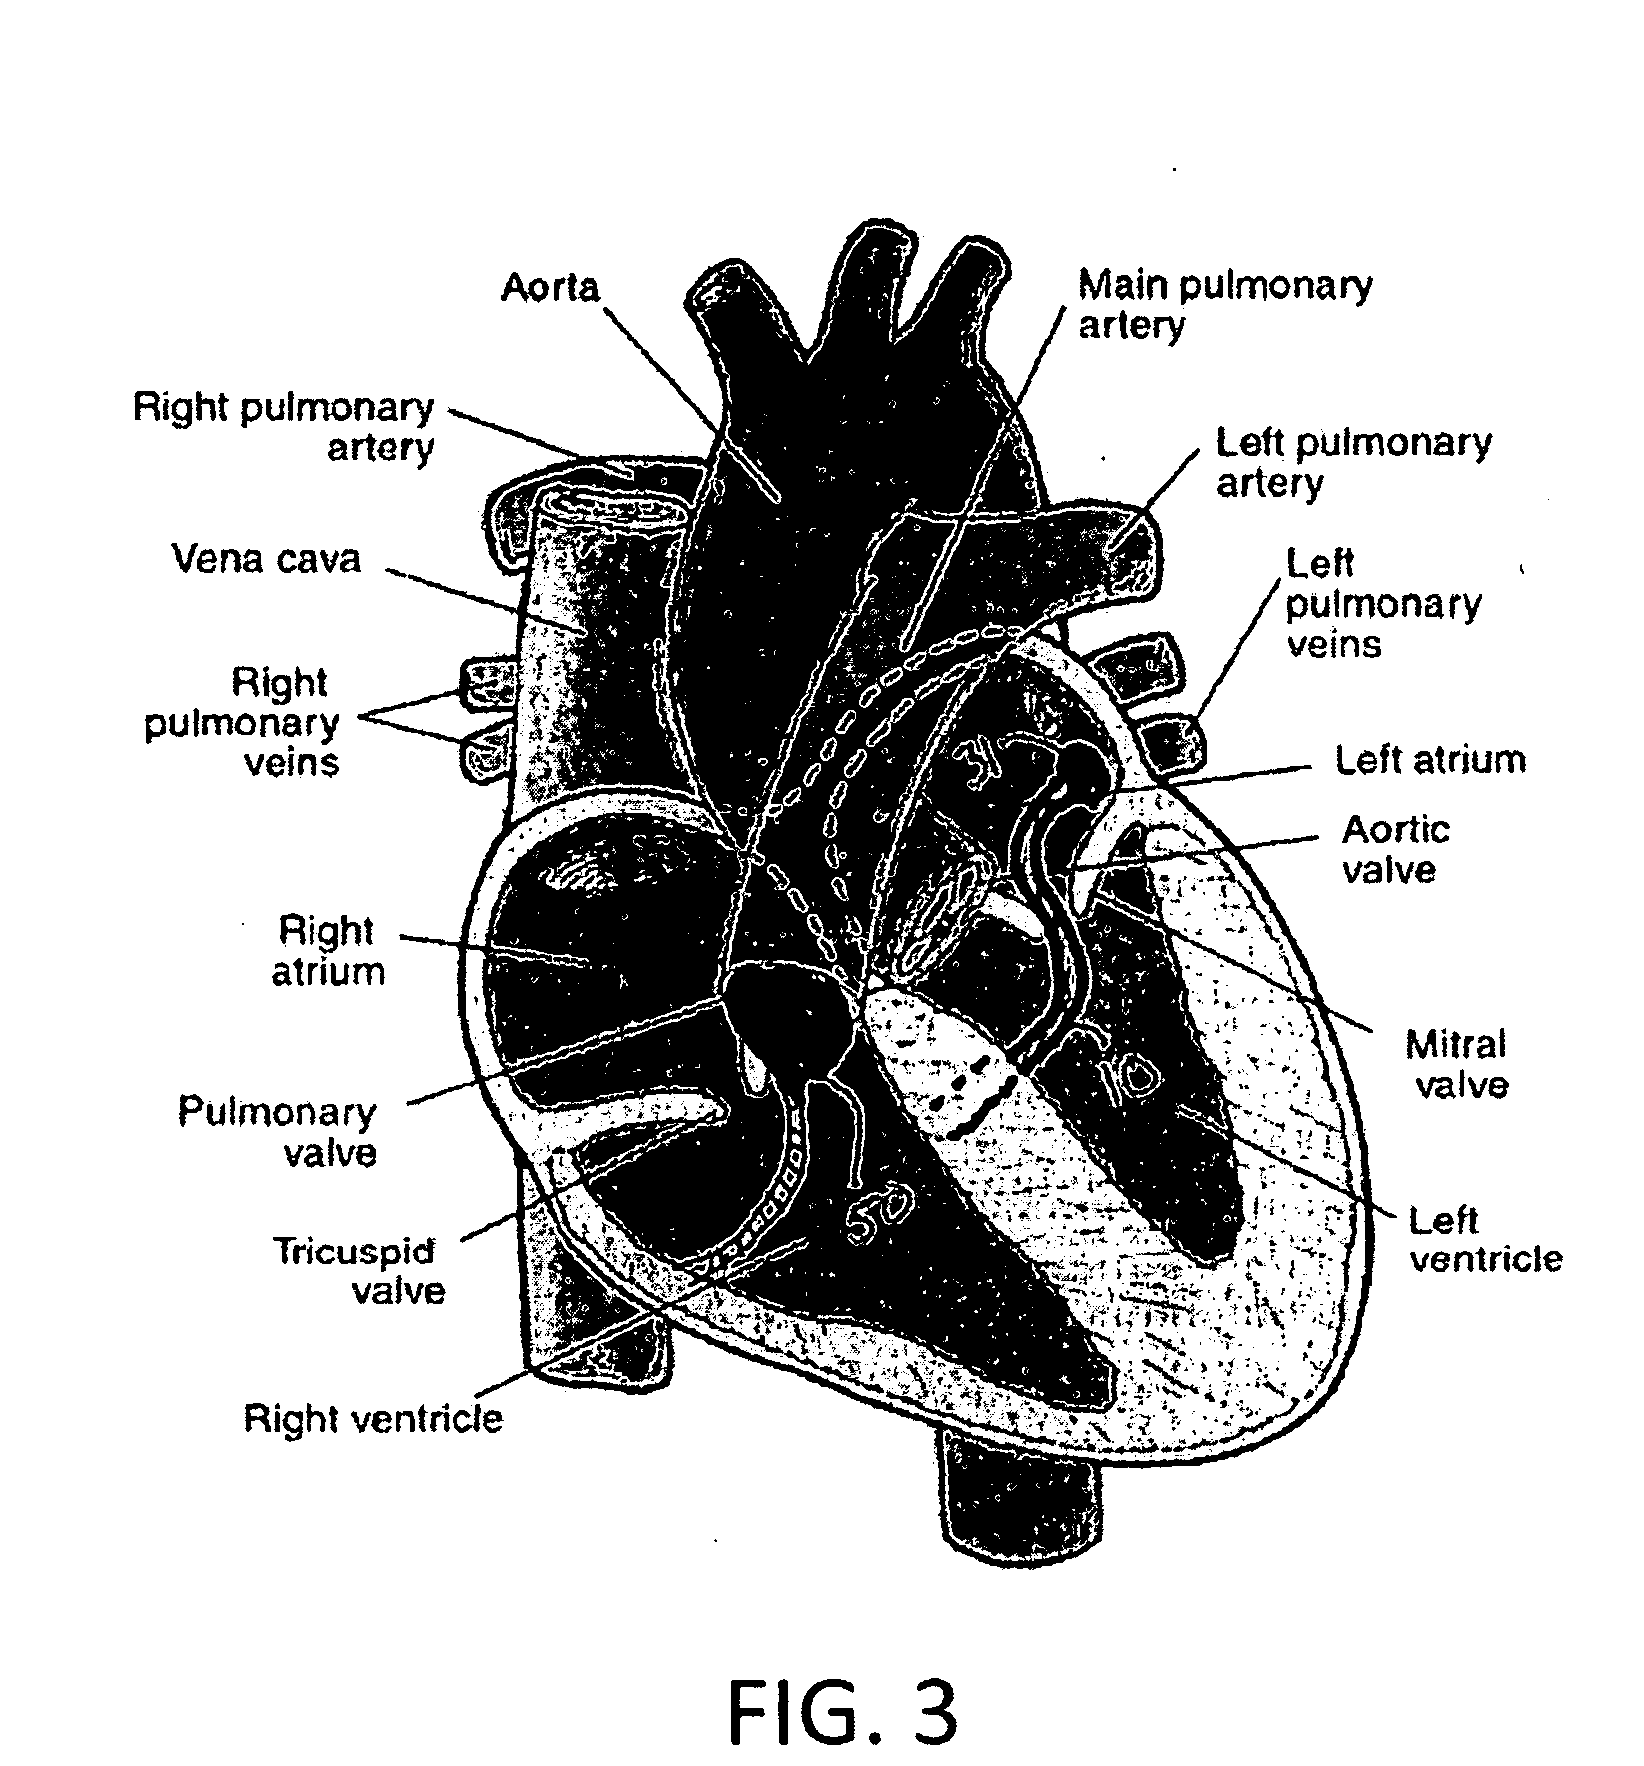 Isolation of pulmonary vein